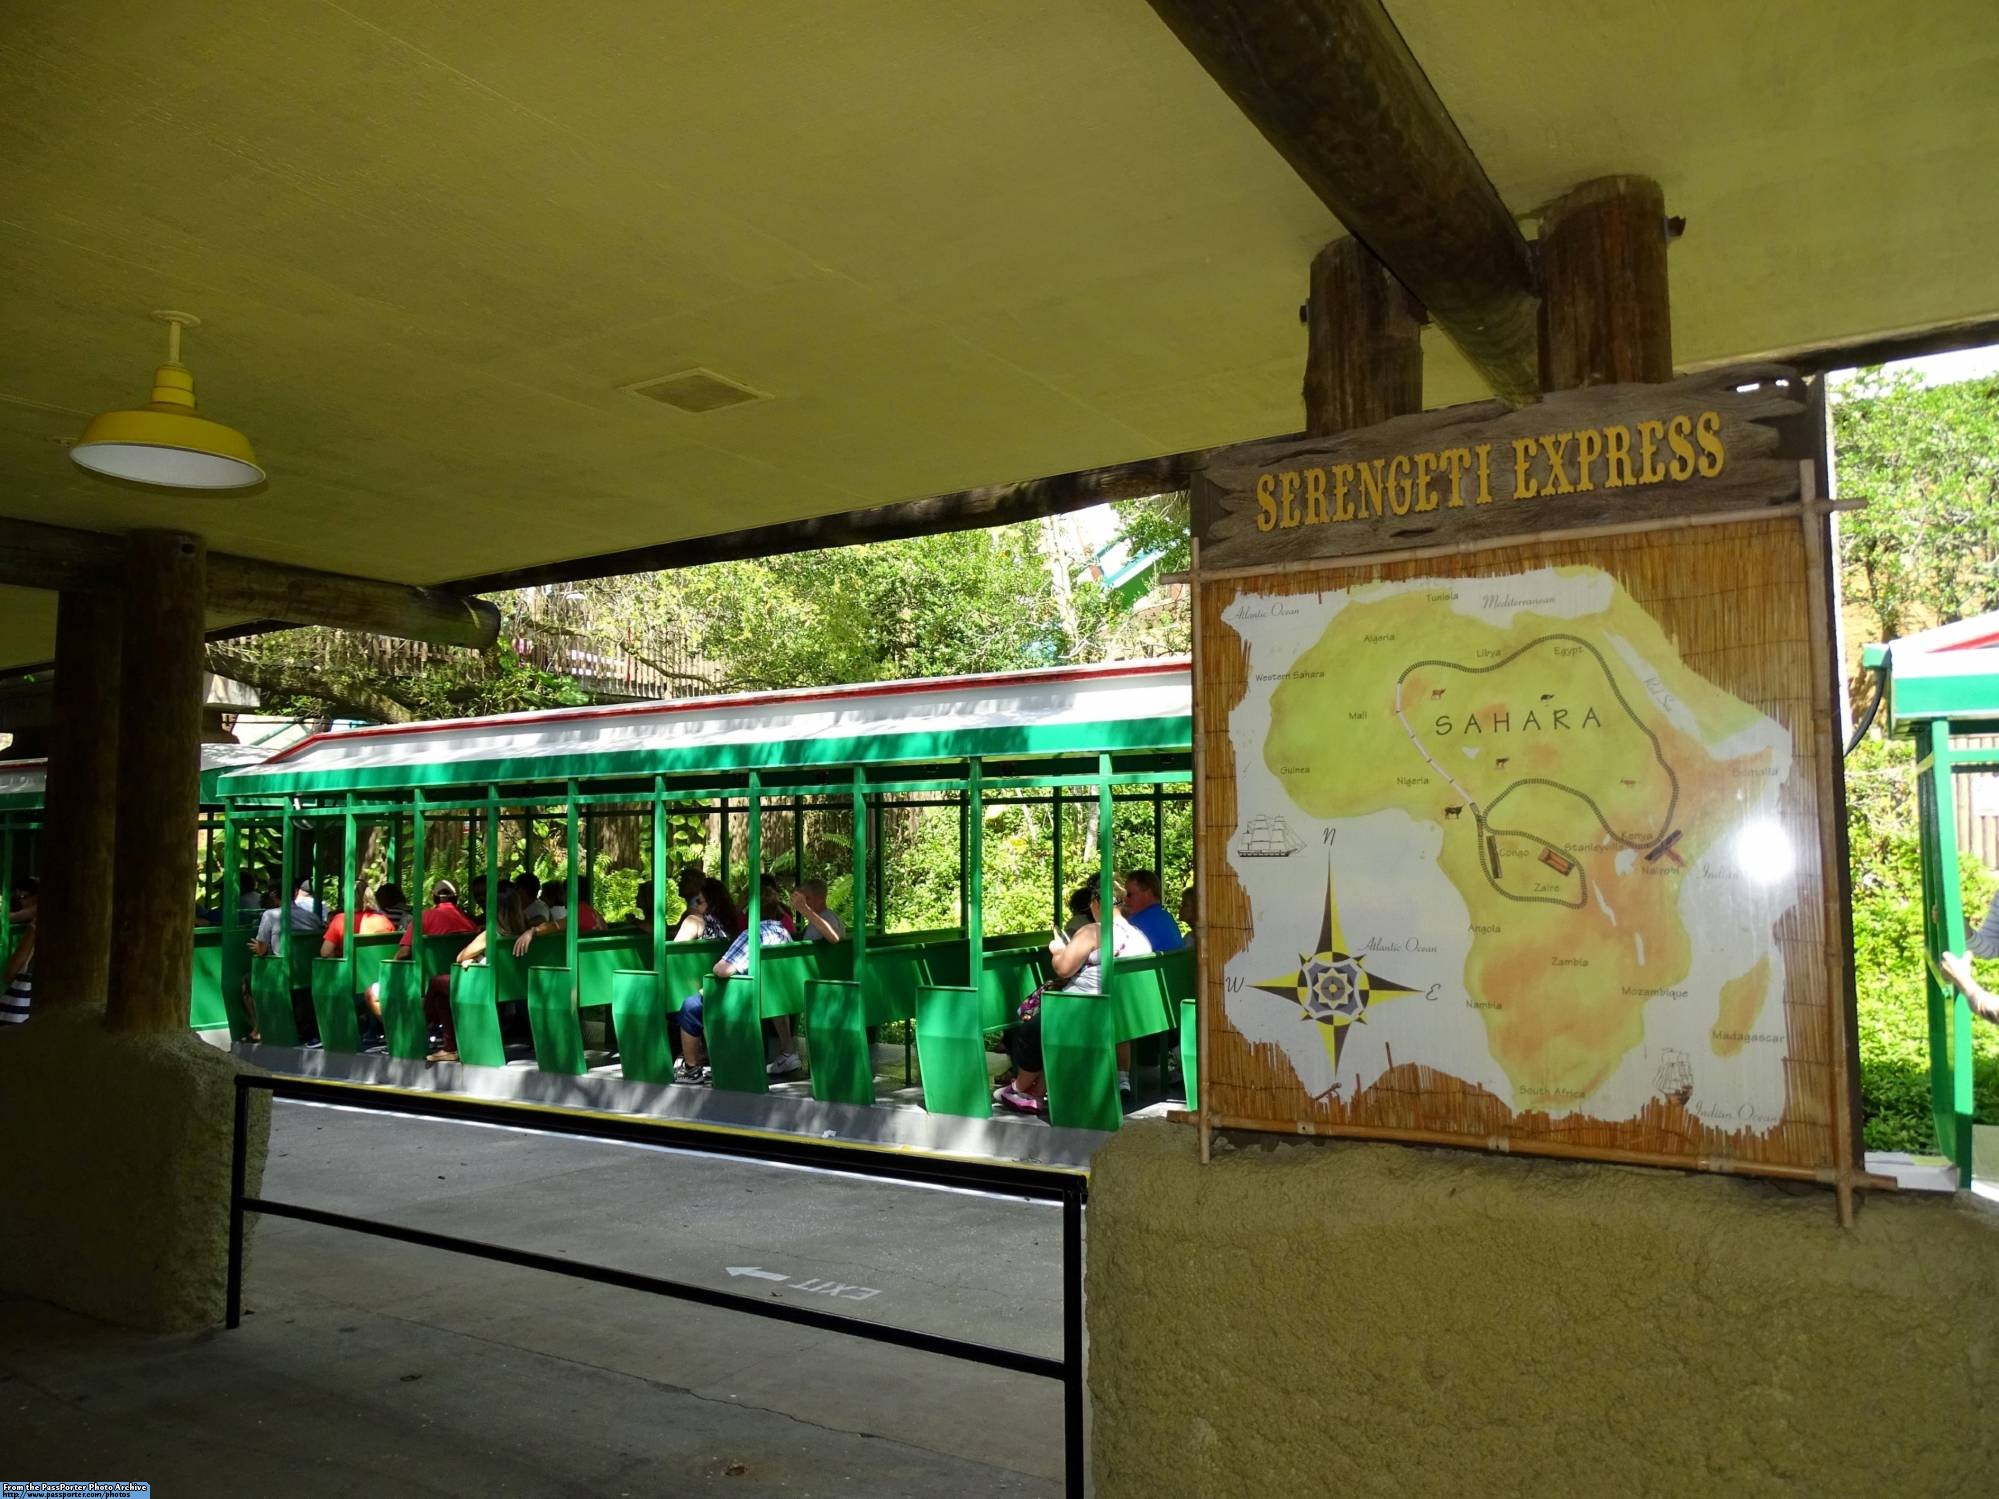 Busch Gardens - Serengeti Express